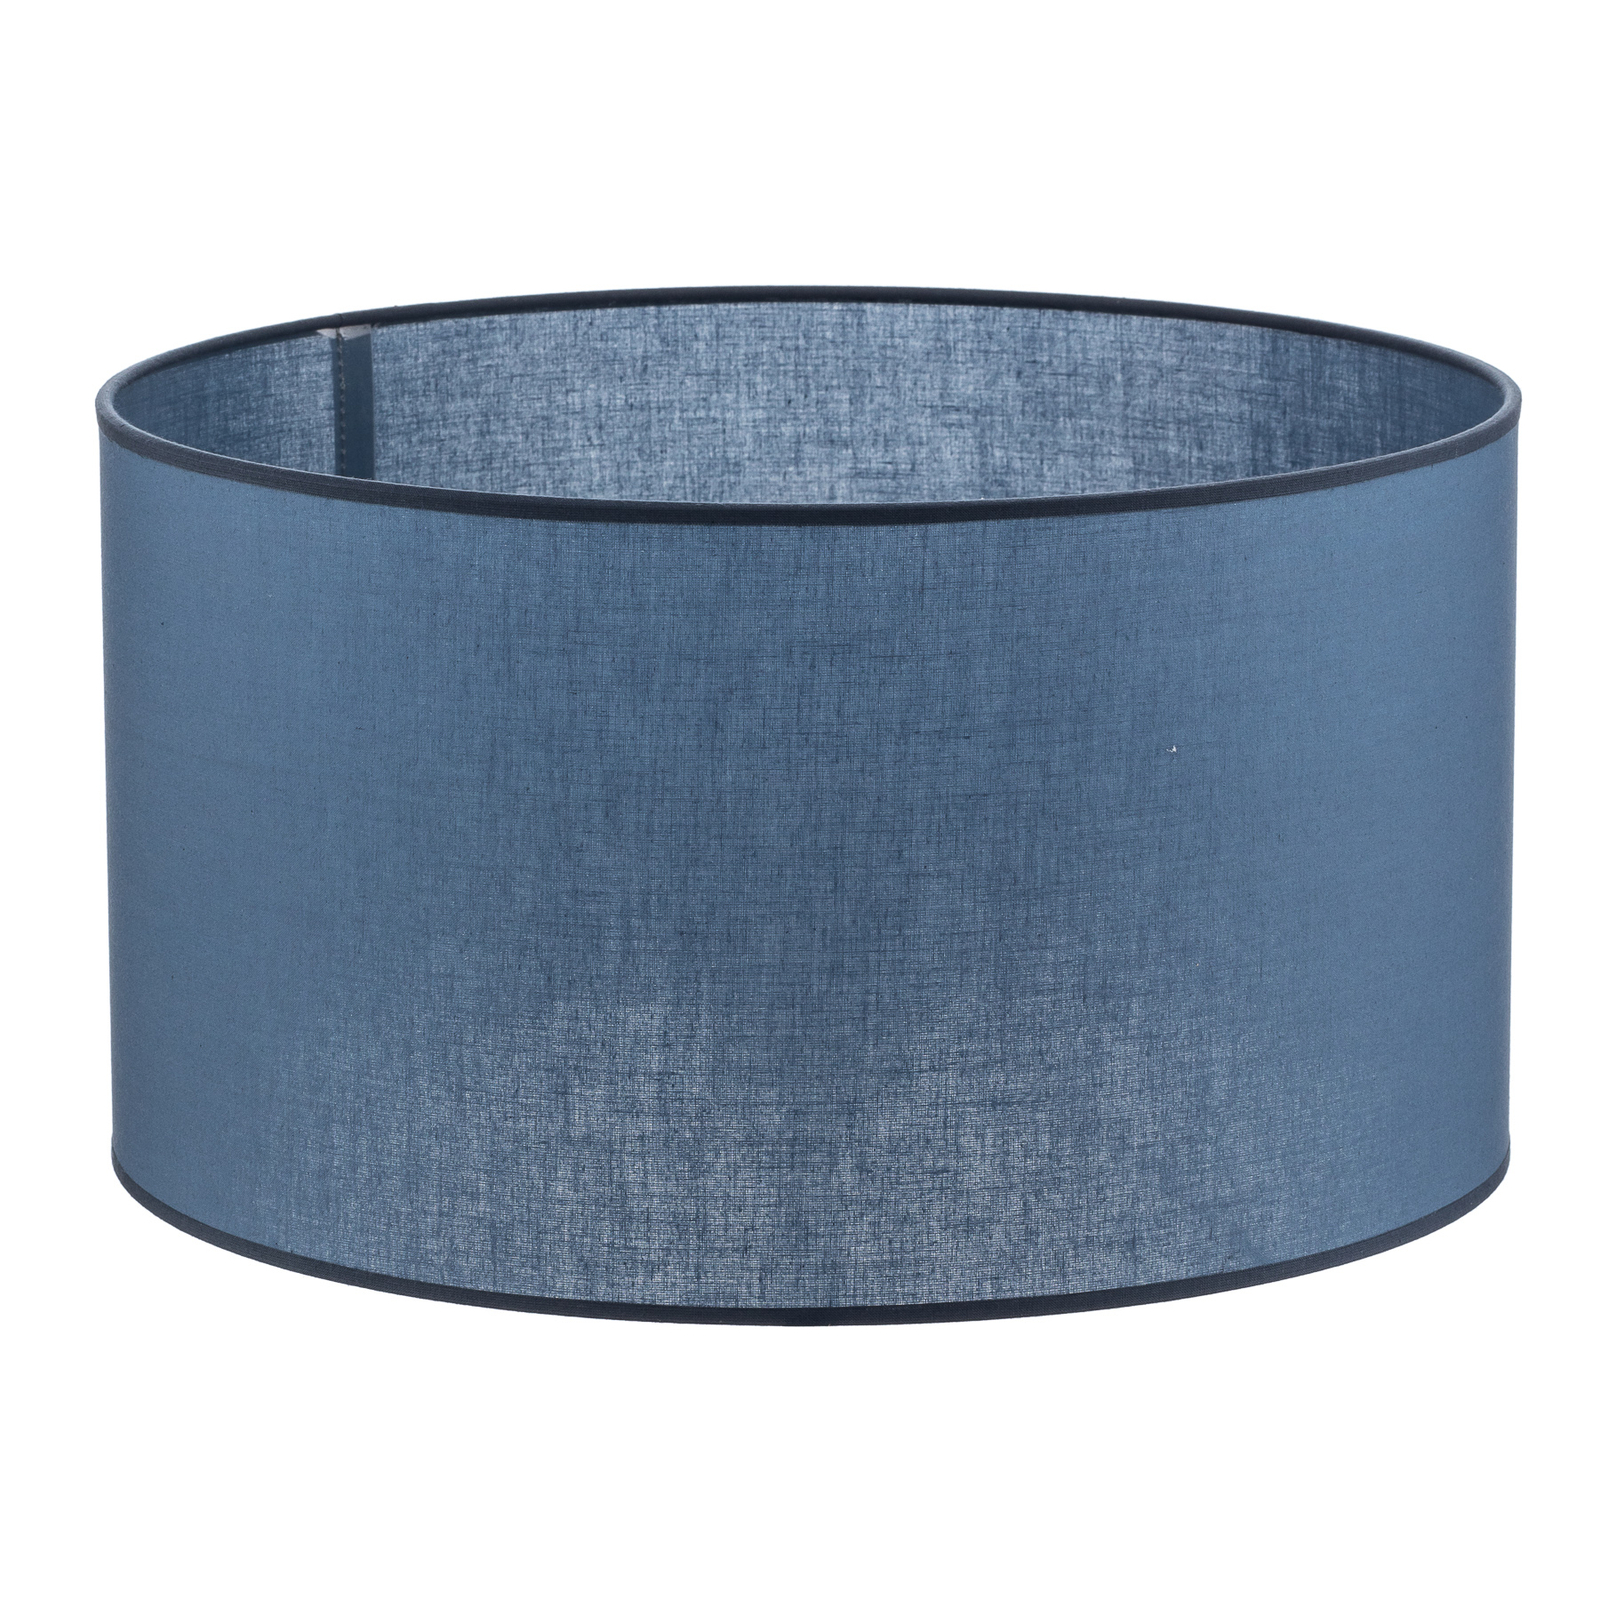 Roller lampshade Ø 40 cm, dark blue